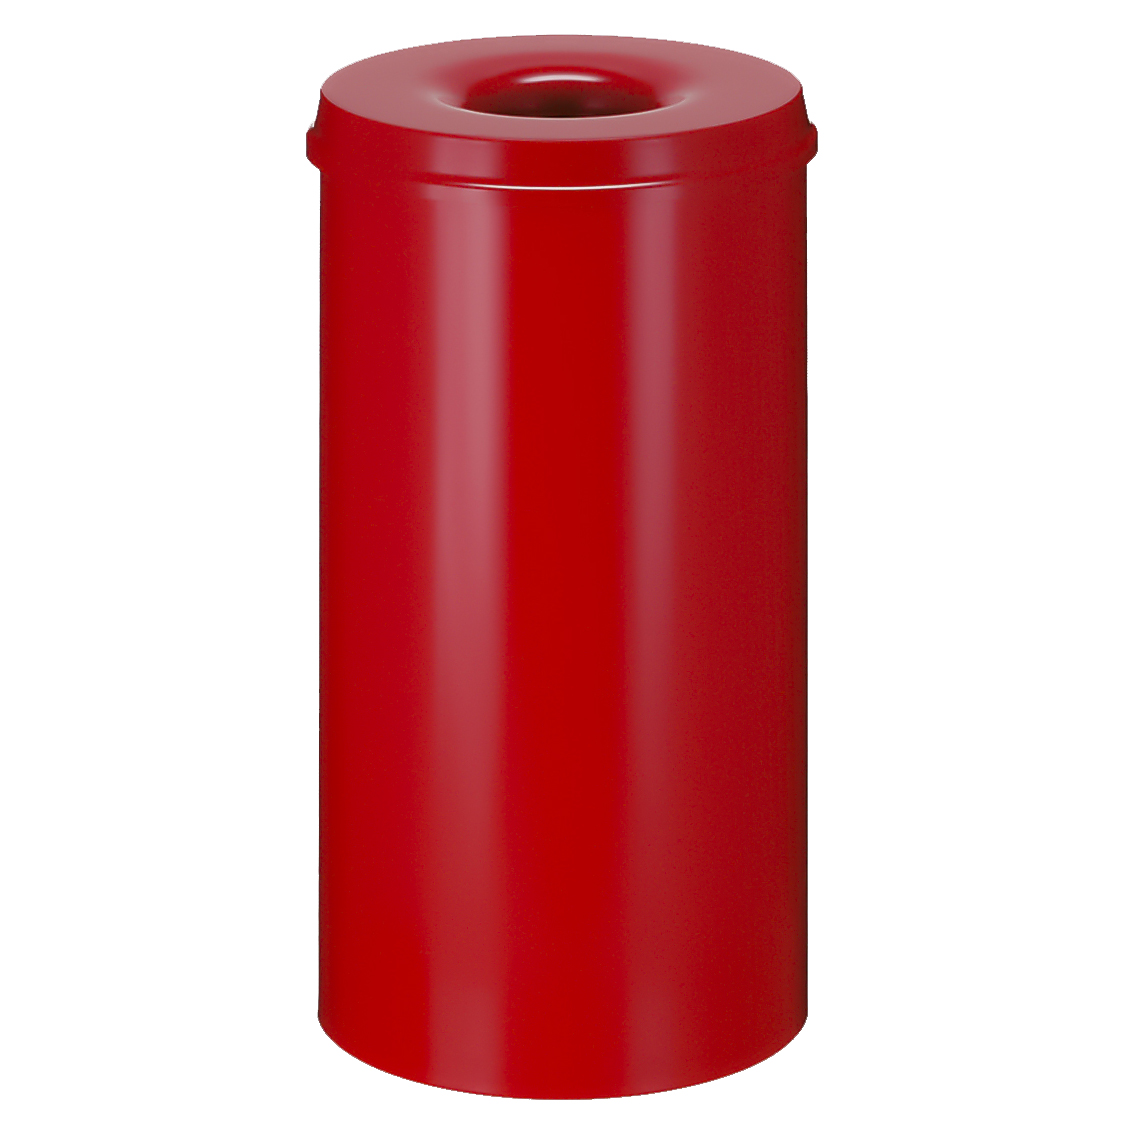 67371 Vlamdover papierbak metaal rood 50ltr.